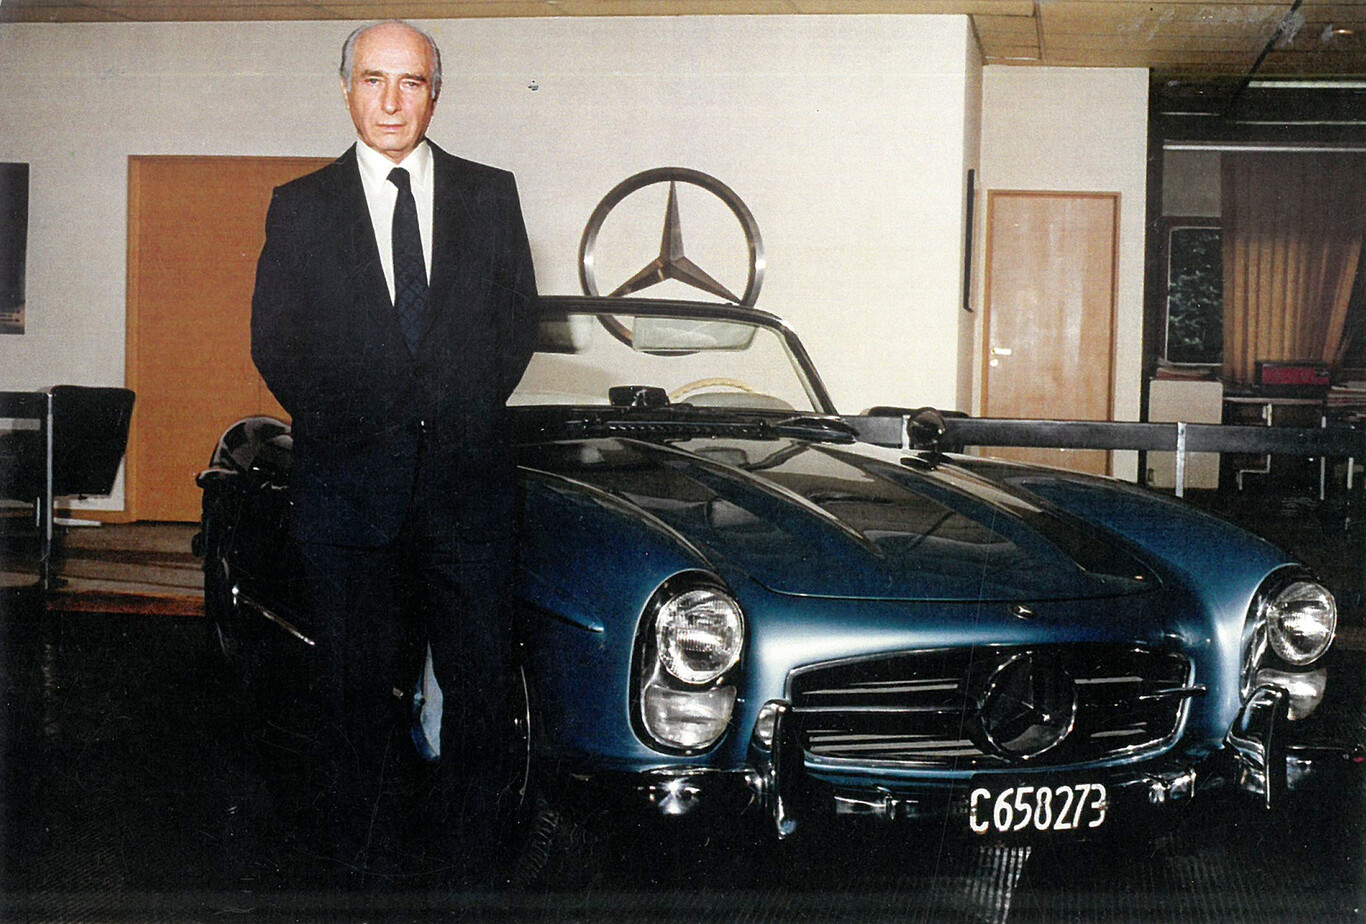 300slRloadster_fangio Se vende: Mercedes-Benz 300 SL Roadster de Fangio